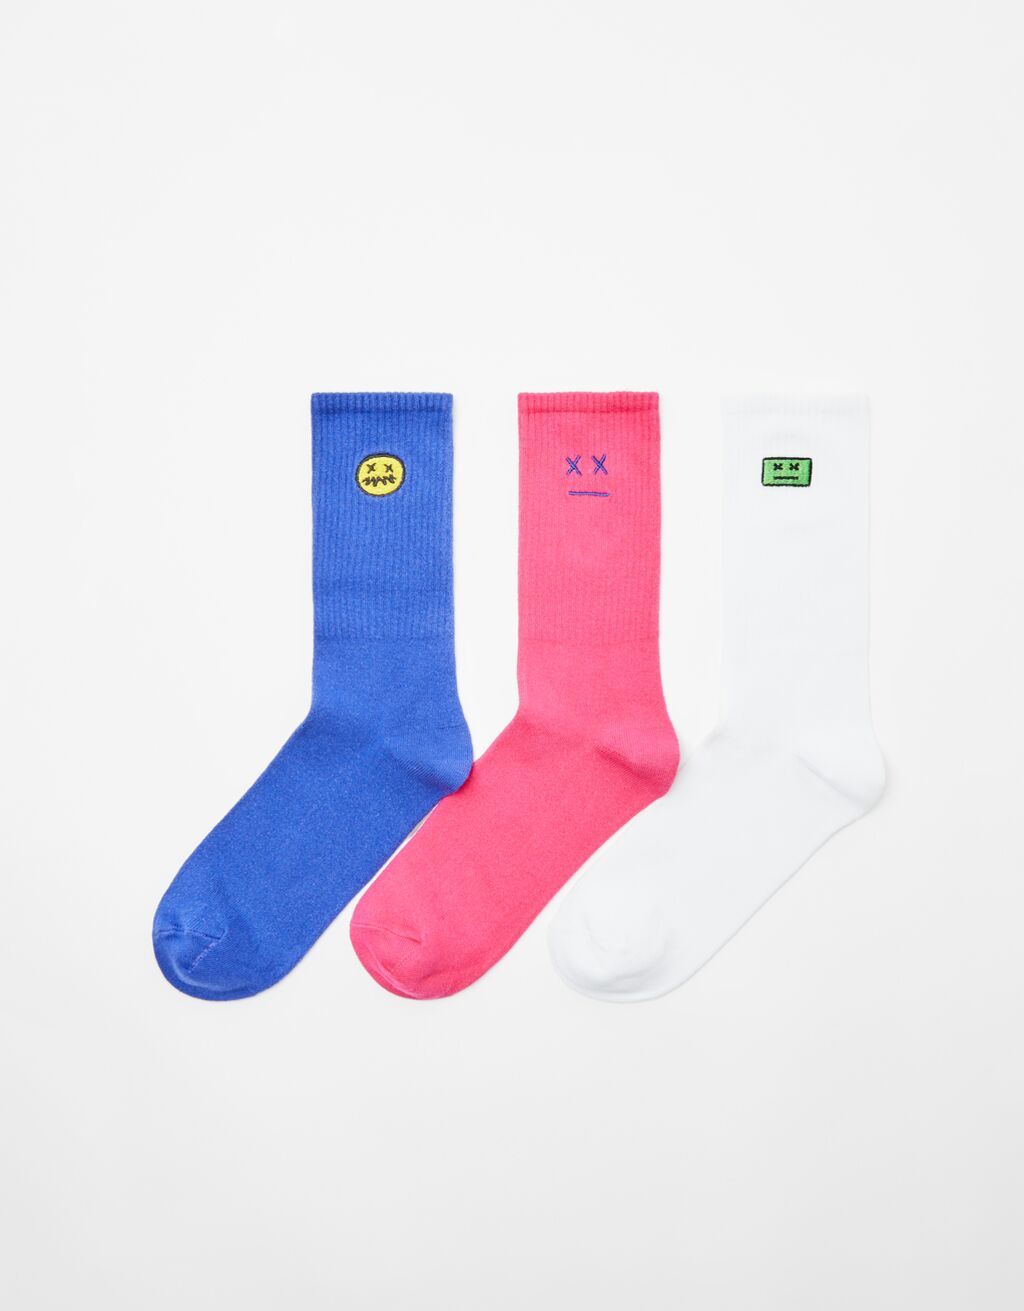 Pack of 3 pairs of color block socks.